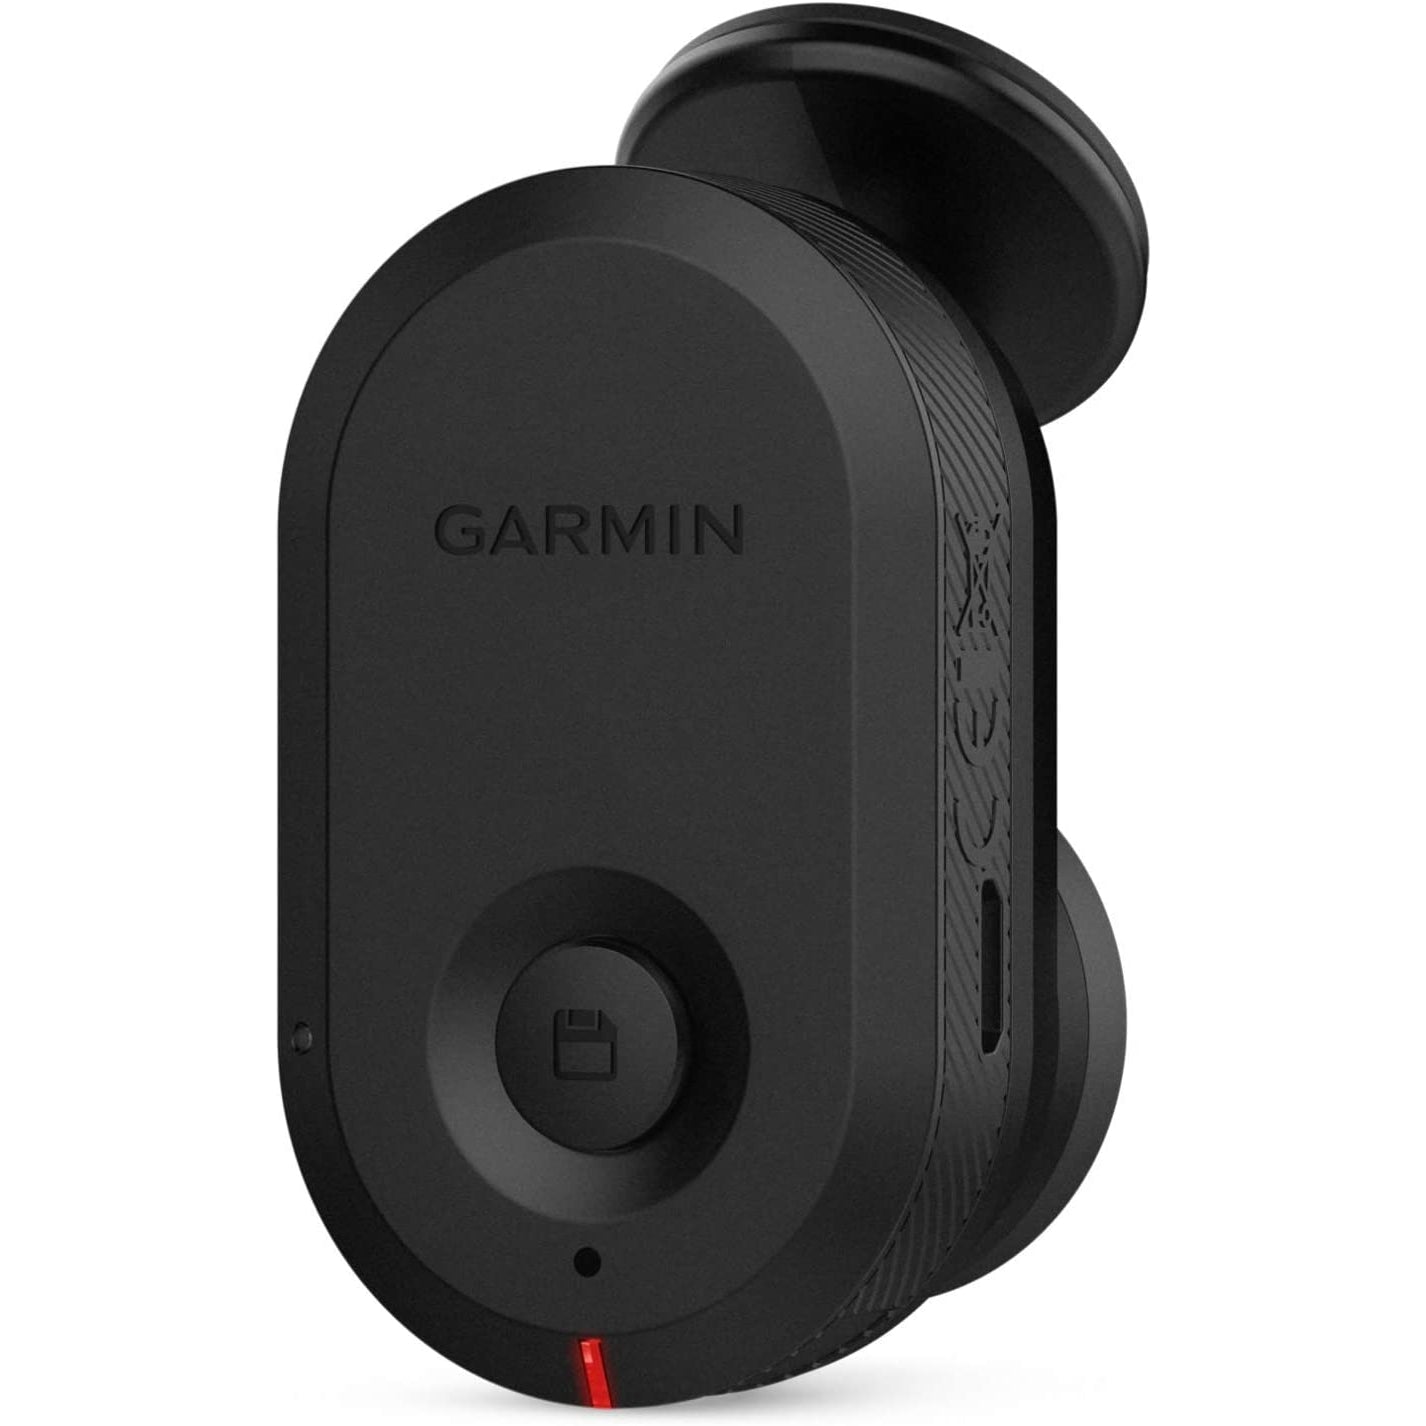 Garmin Dash Cam Mini - Black - Refurbished Excellent